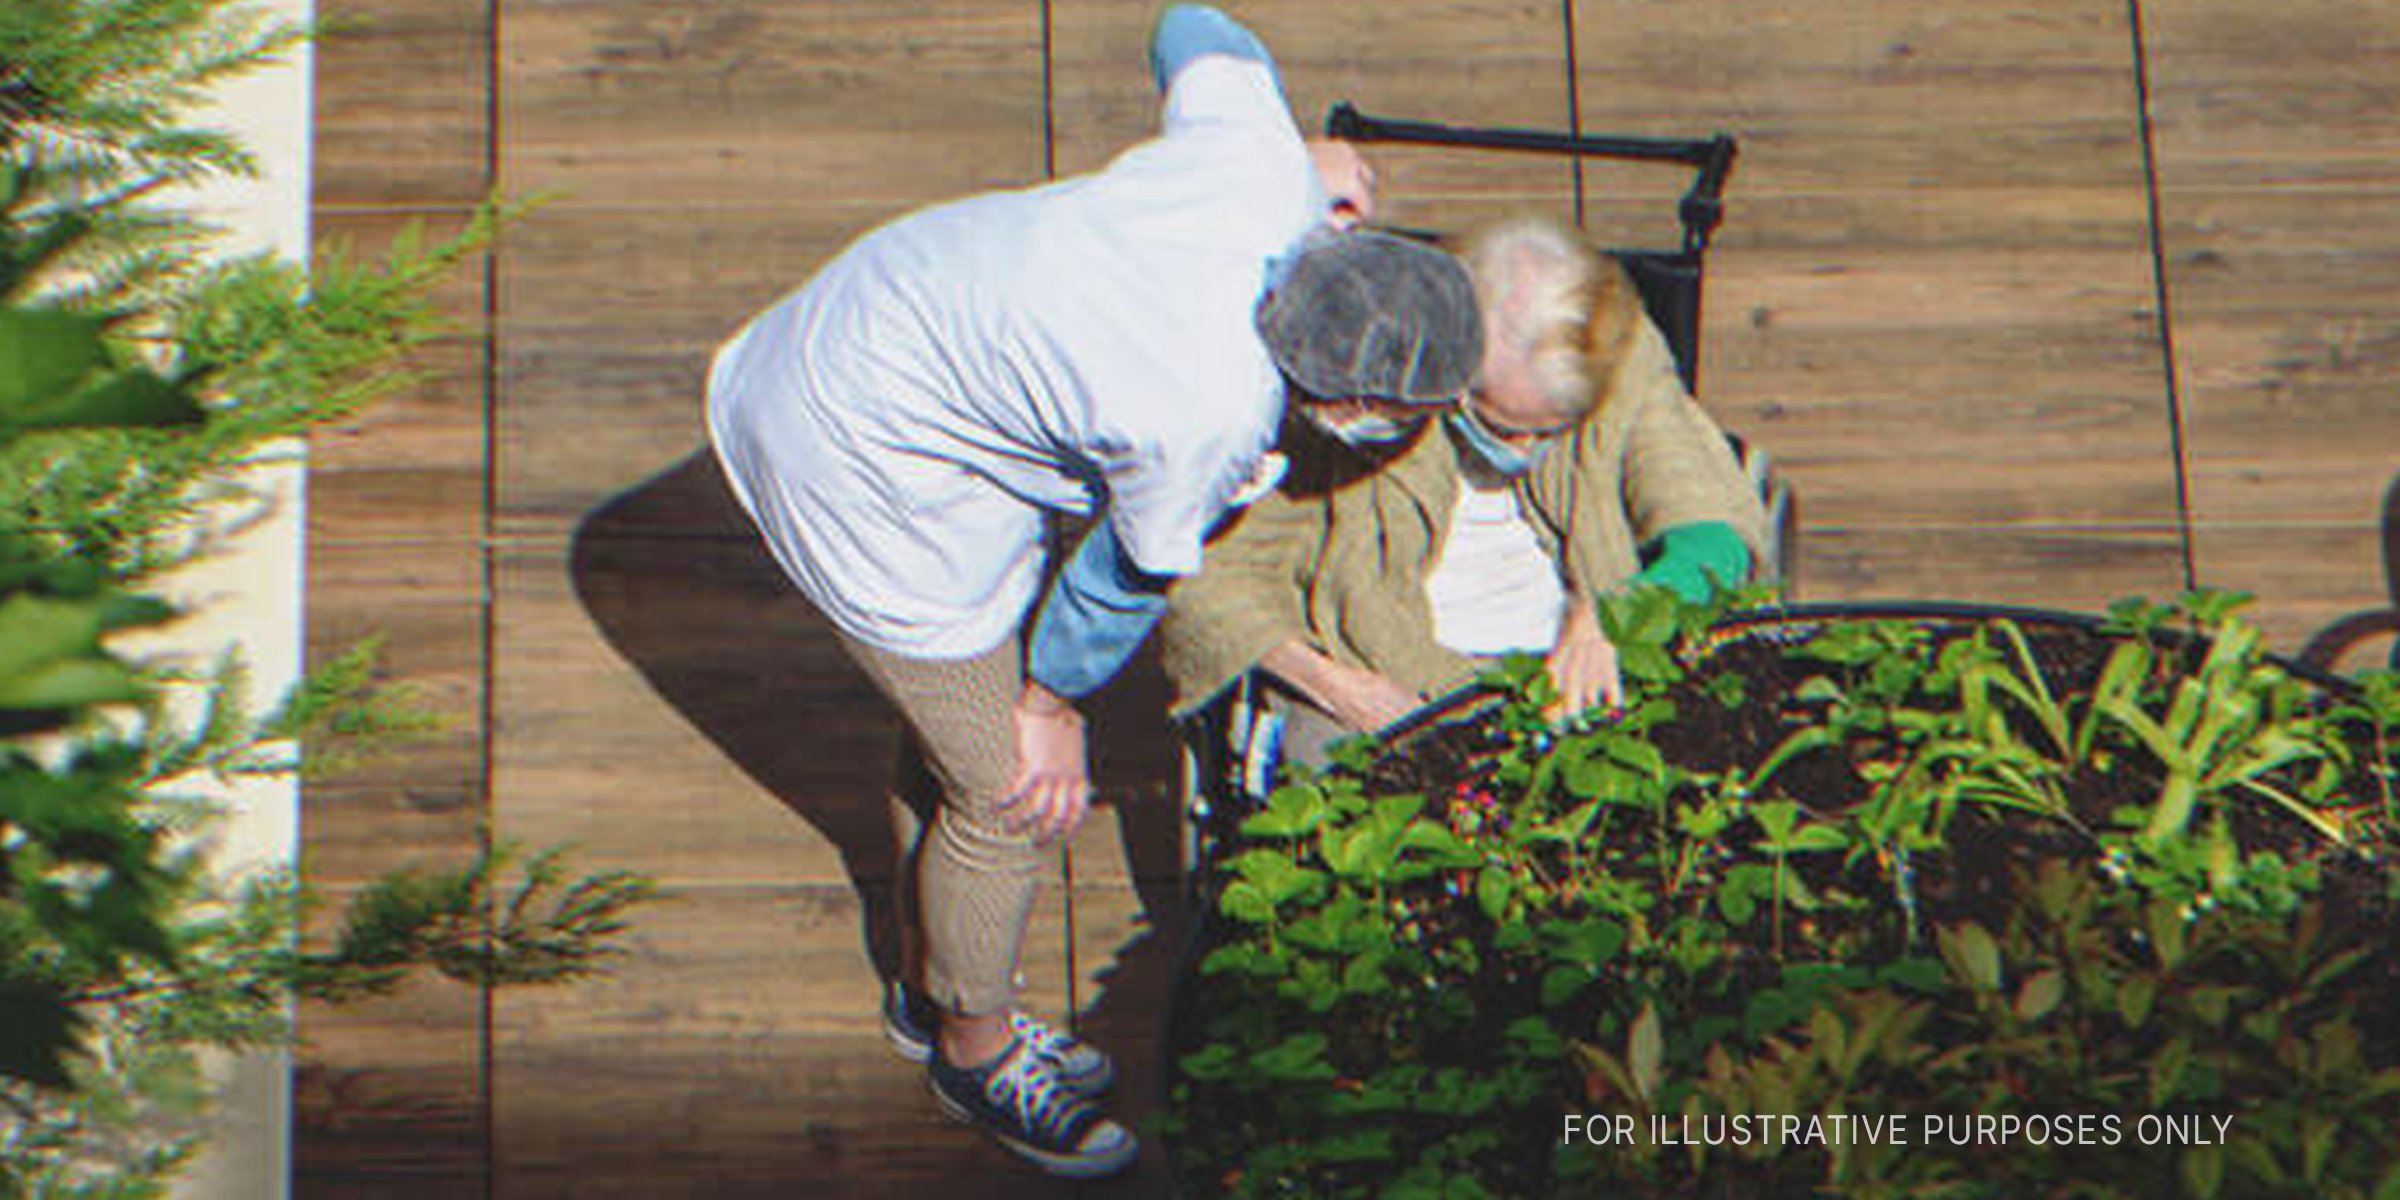 Old woman in garden | Source: Shutterstock